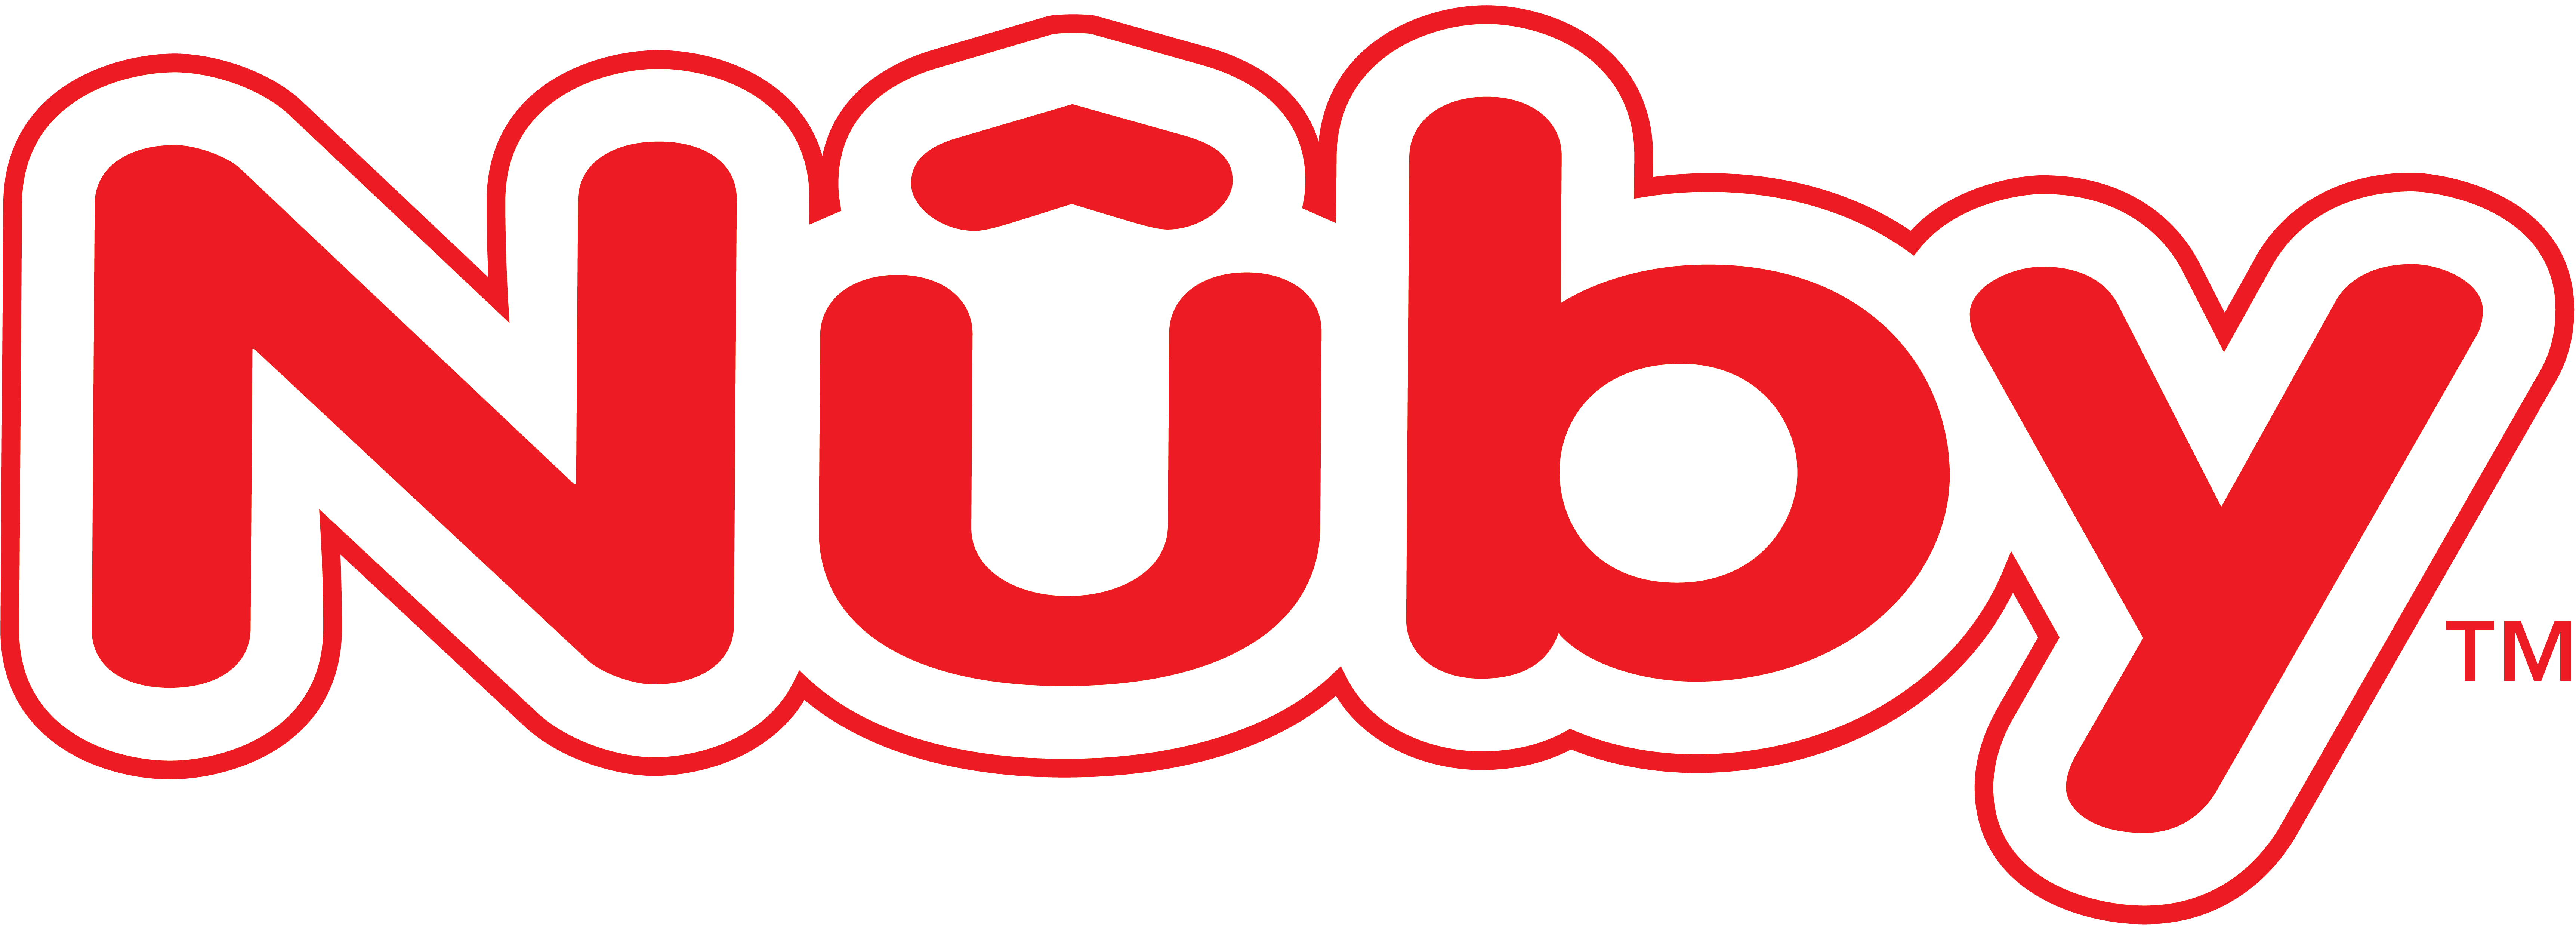 Nuby-logo